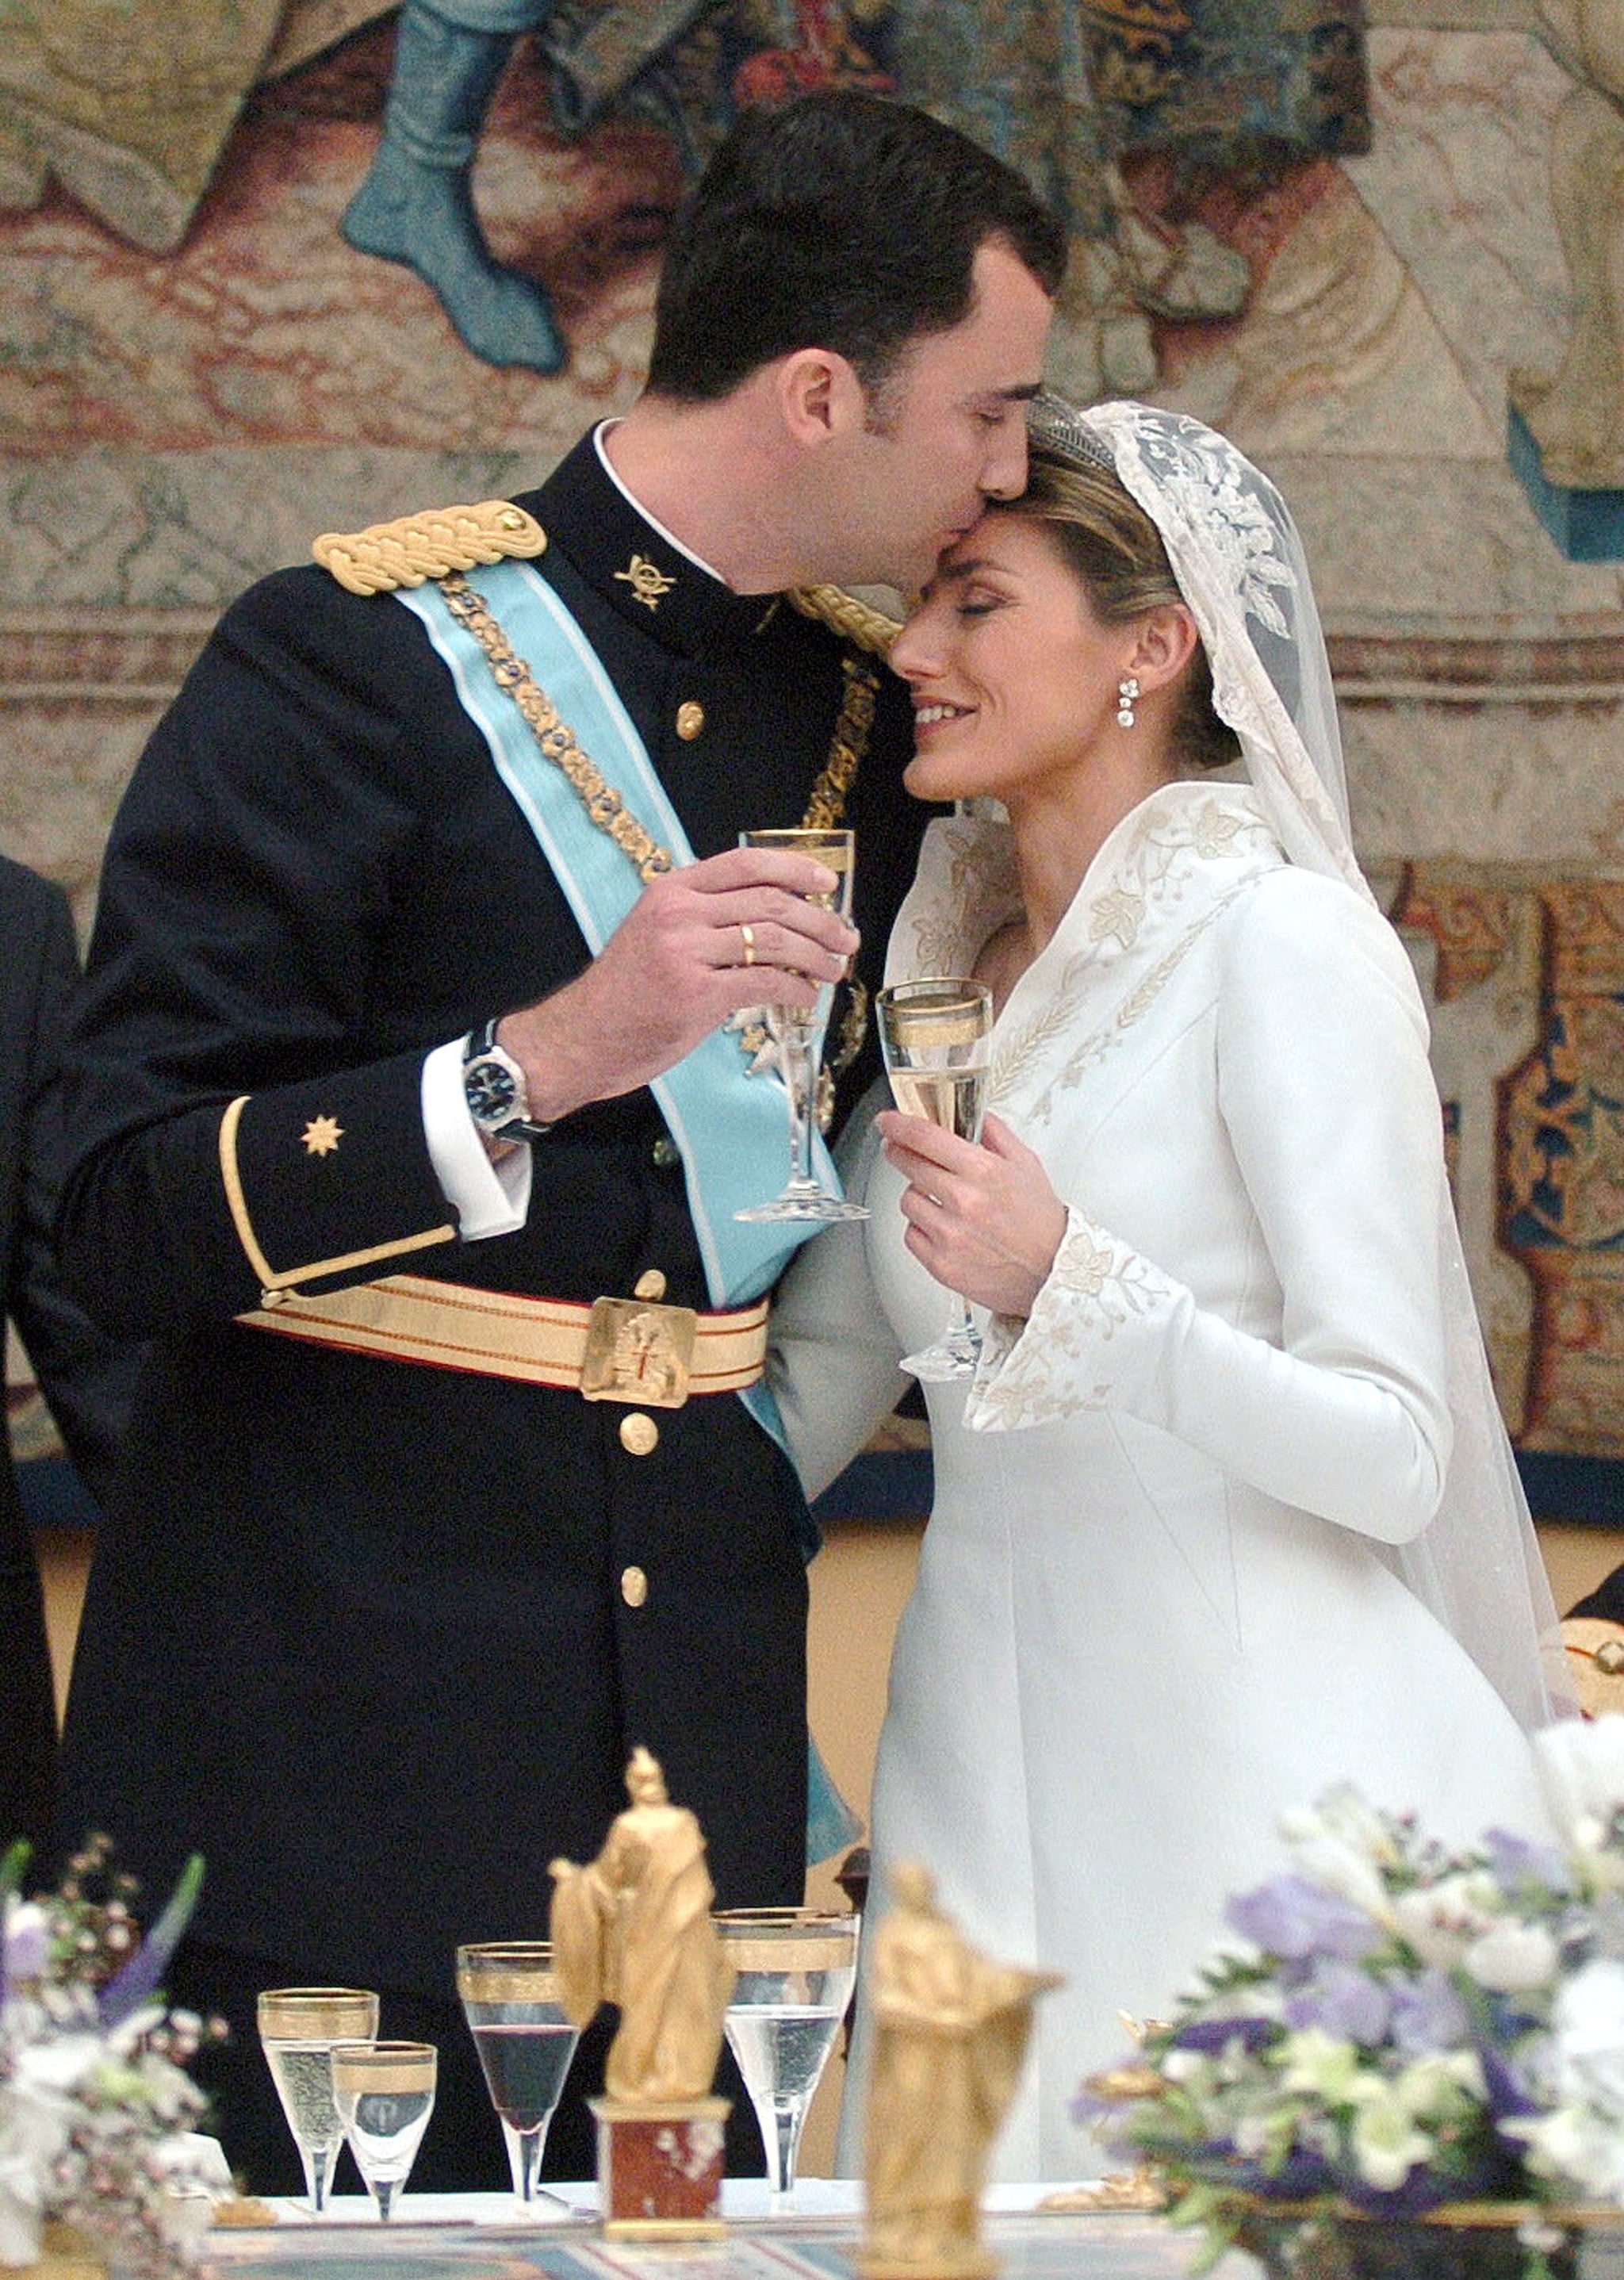 Who-Designed-Queen-Letizia-Spain-Wedding-Dress.jpg